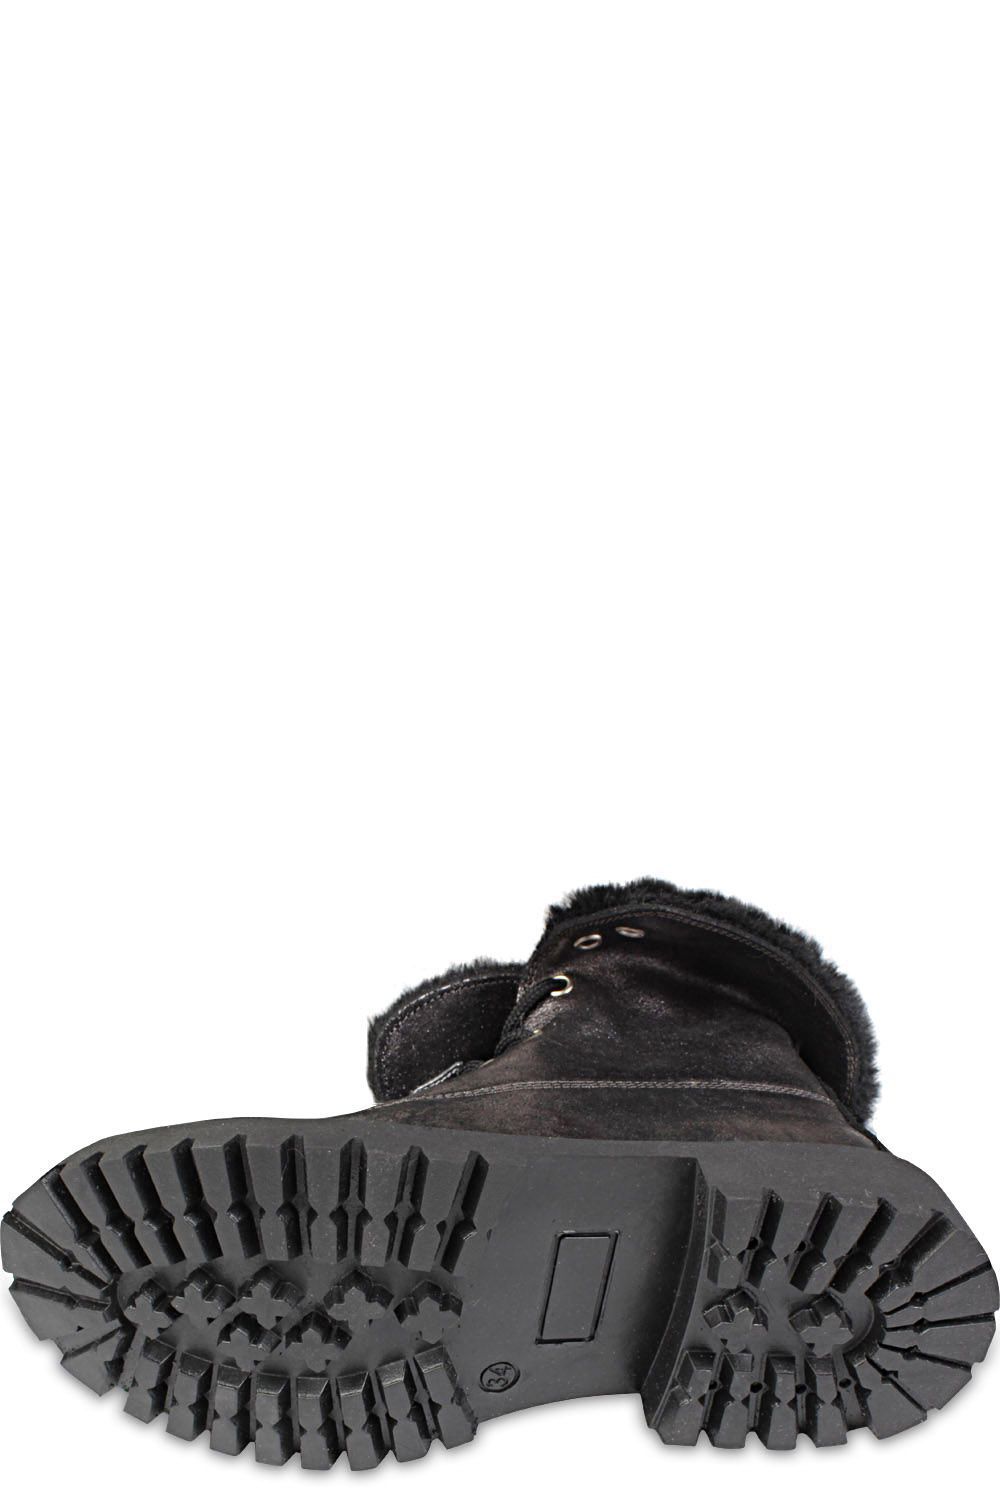 Ботинки Sho.e.b.76, размер 33, цвет серый 541AR2 - фото 3